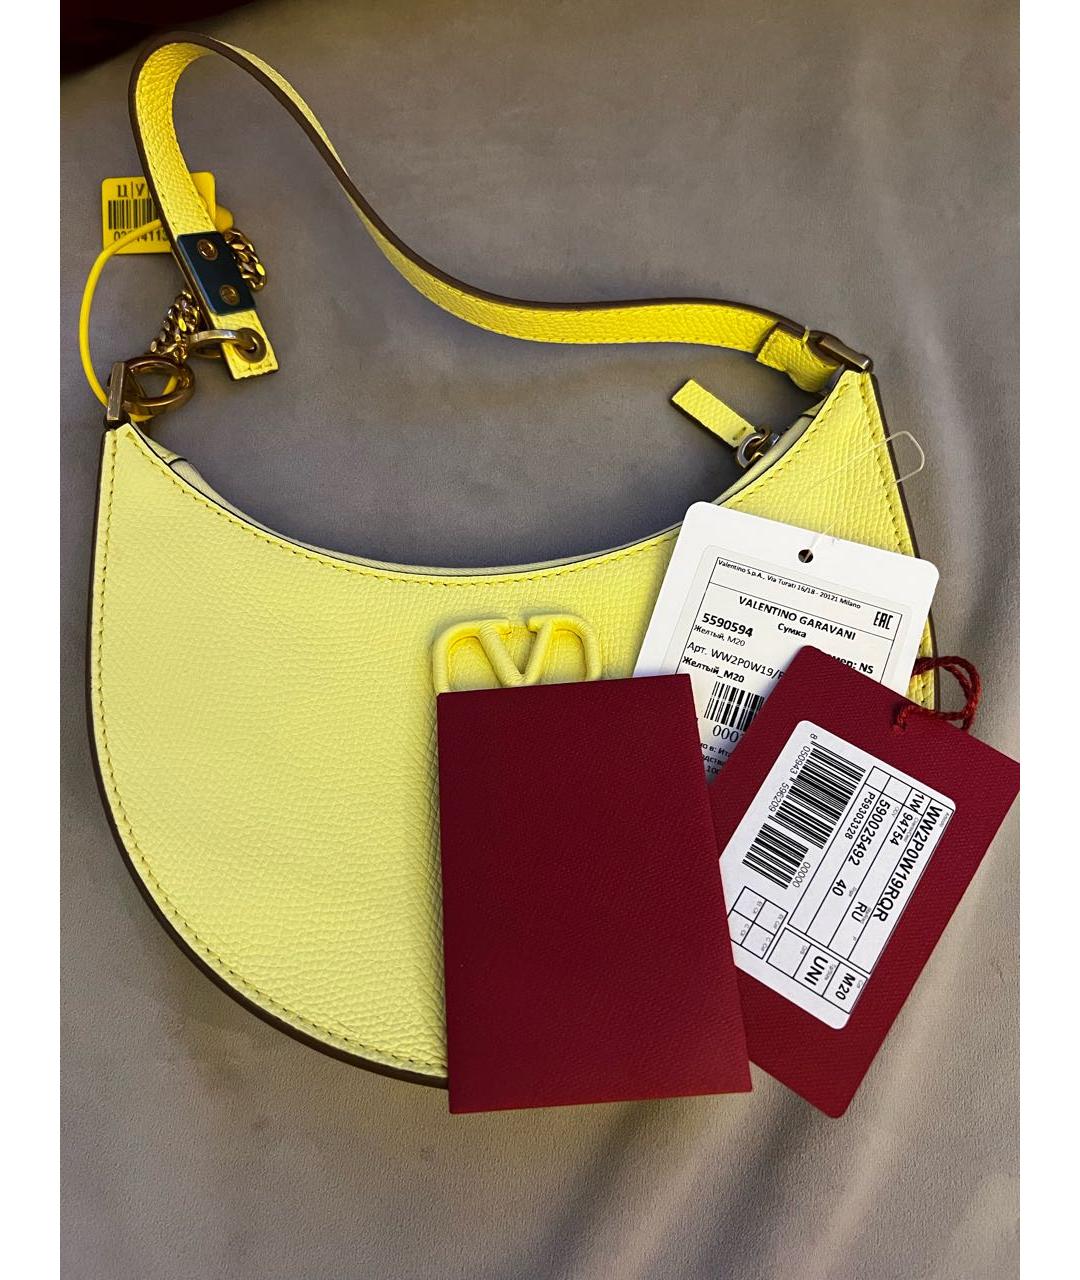 VALENTINO Желтая кожаная сумка с короткими ручками, фото 3